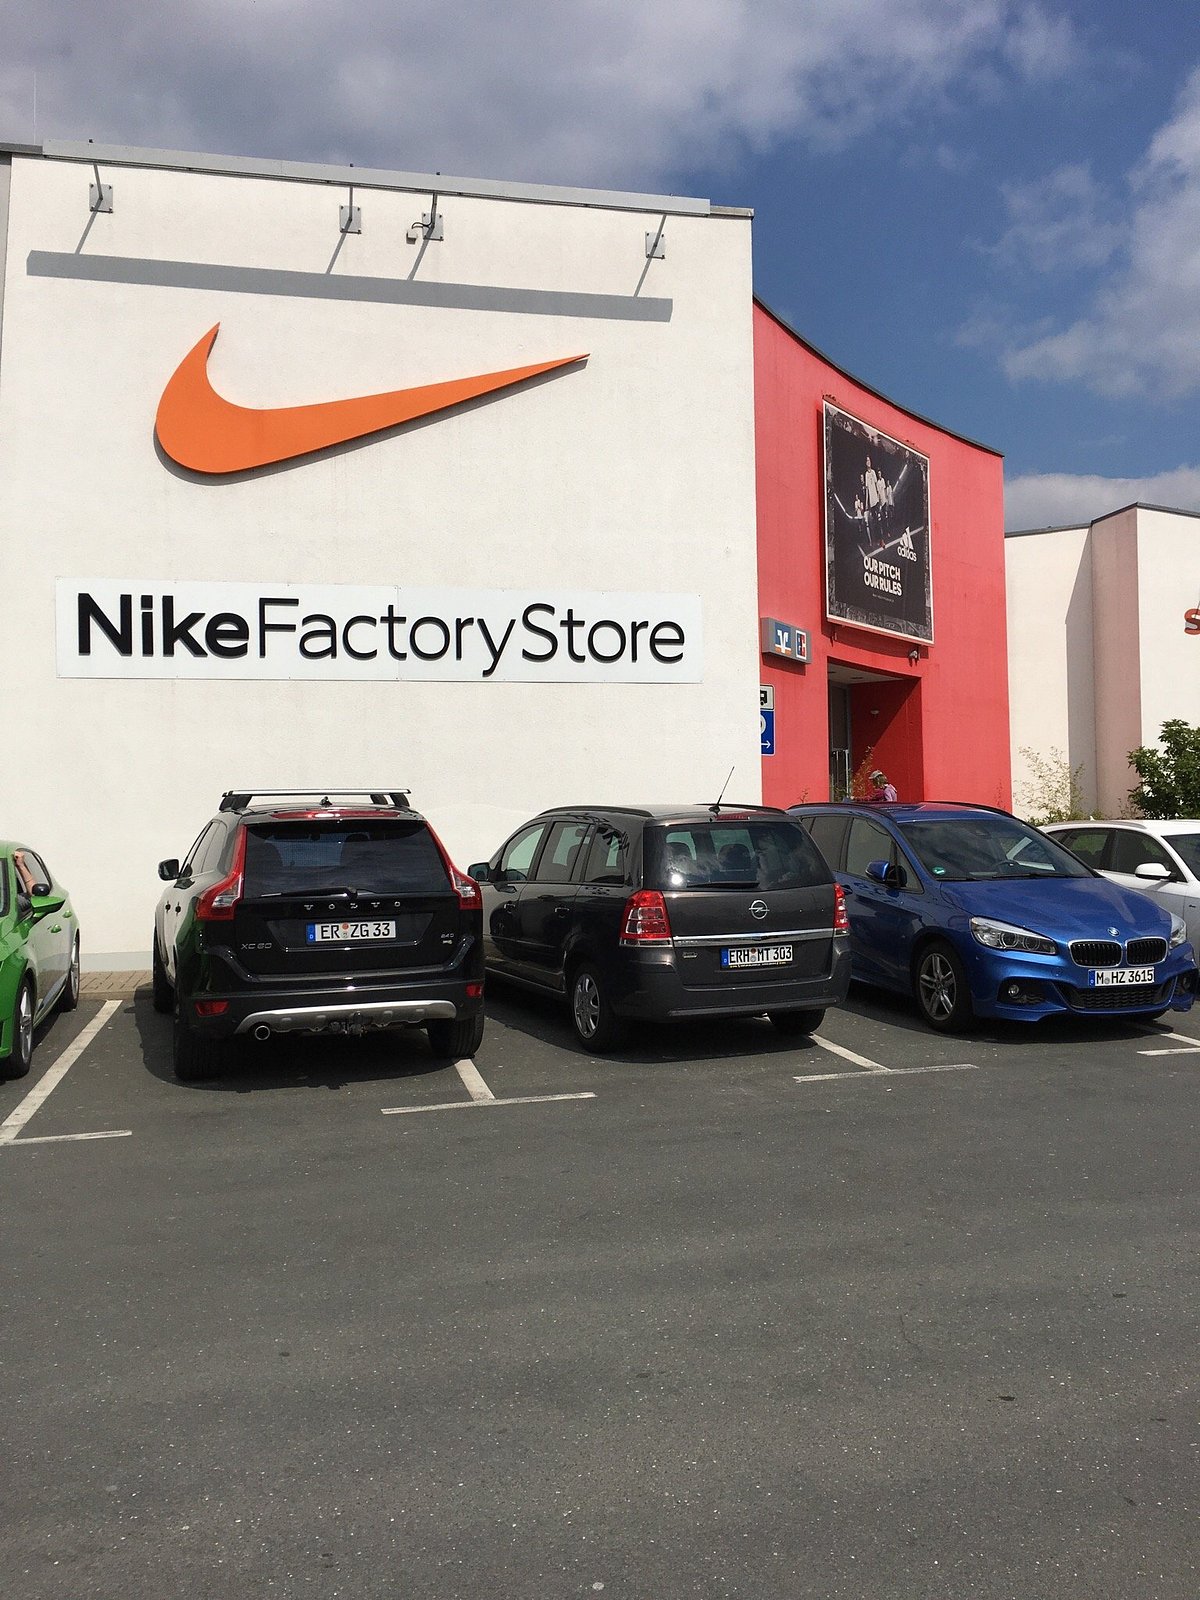 Nike Factory Store (Herzogenaurach) - Need Know BEFORE Go